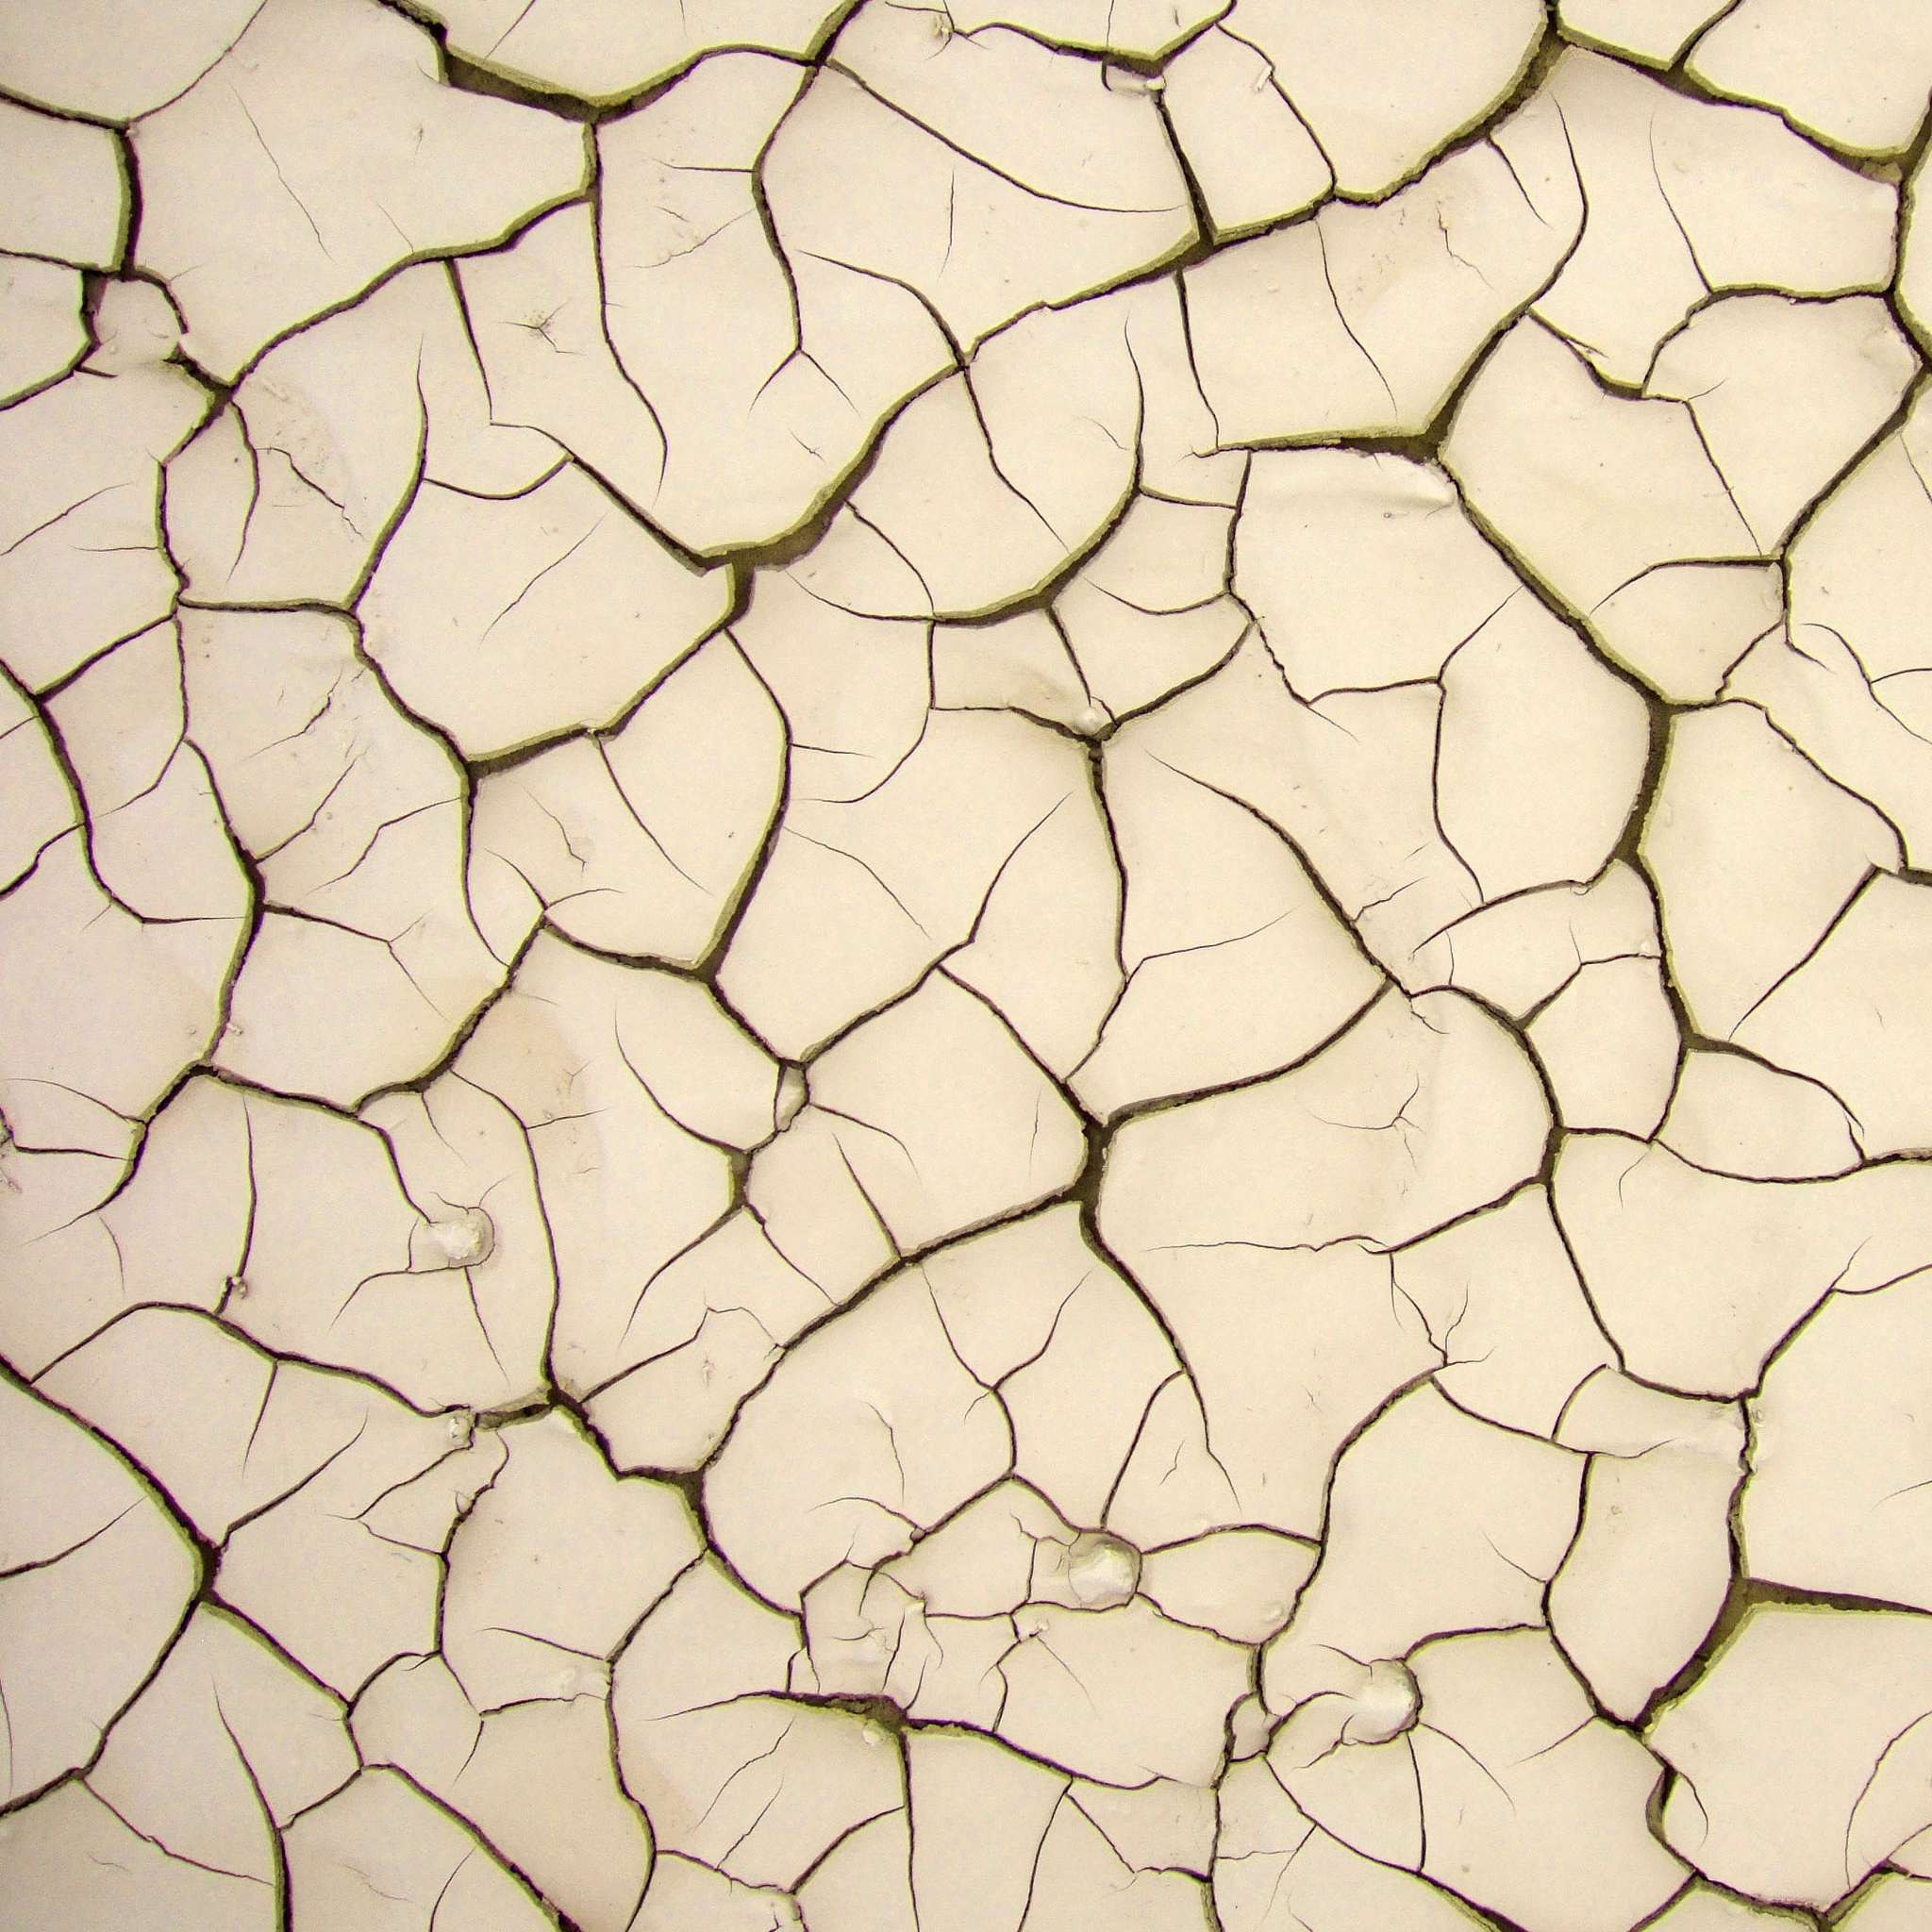 jared - mud crack texture ipad wallpaper